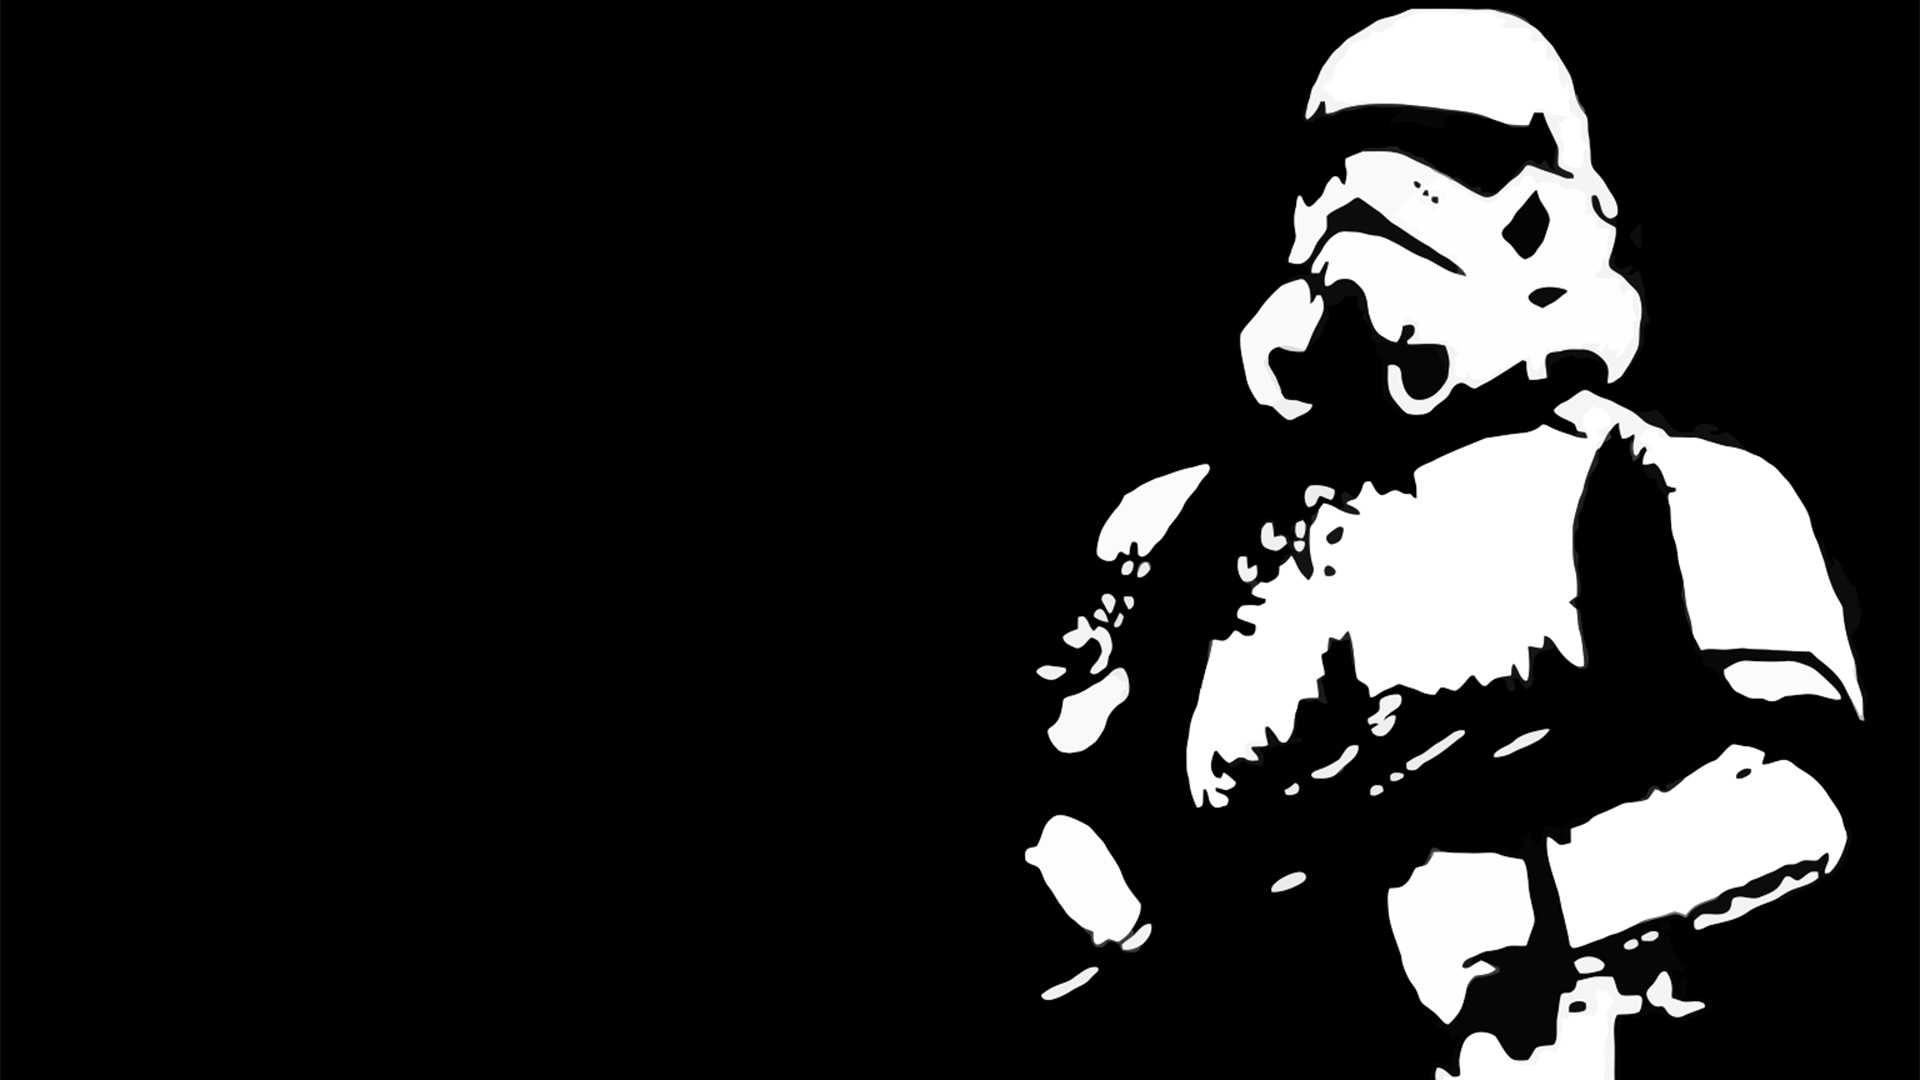 Backgrounds for star wars wallpaper stormtrooper movie images star